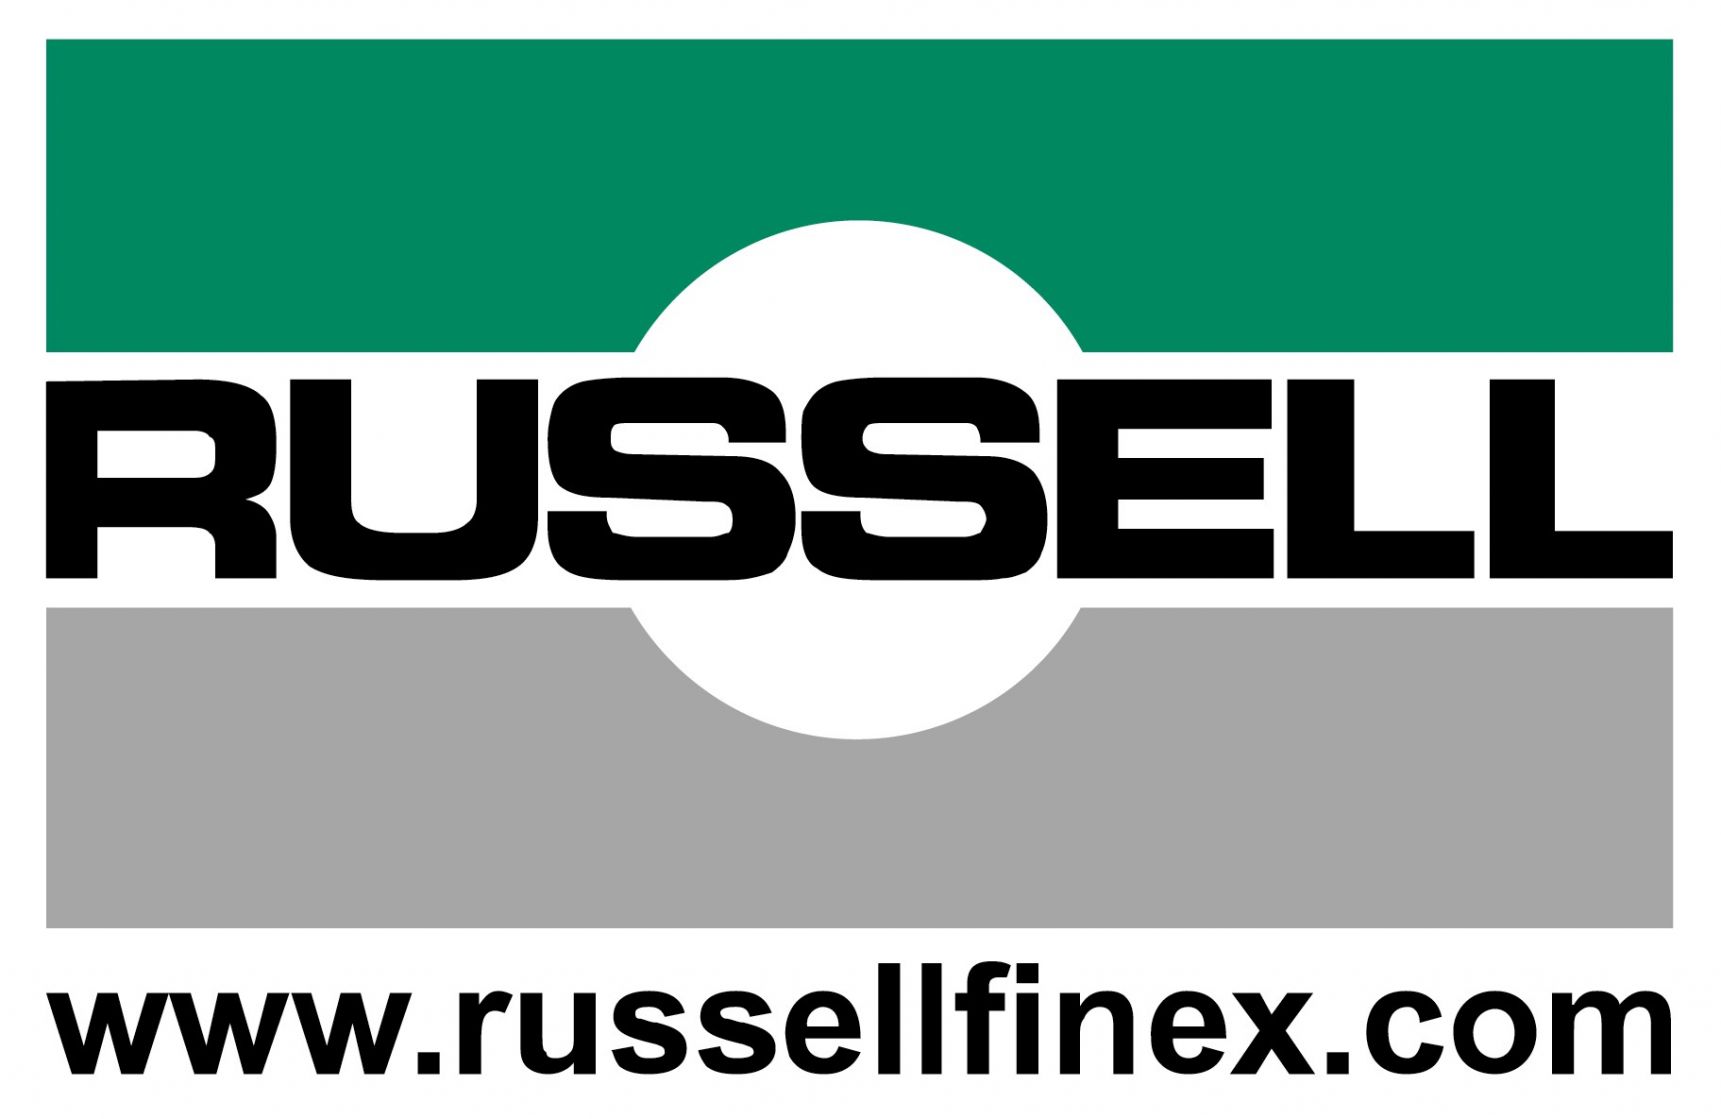 Russell Finex Logo<br />